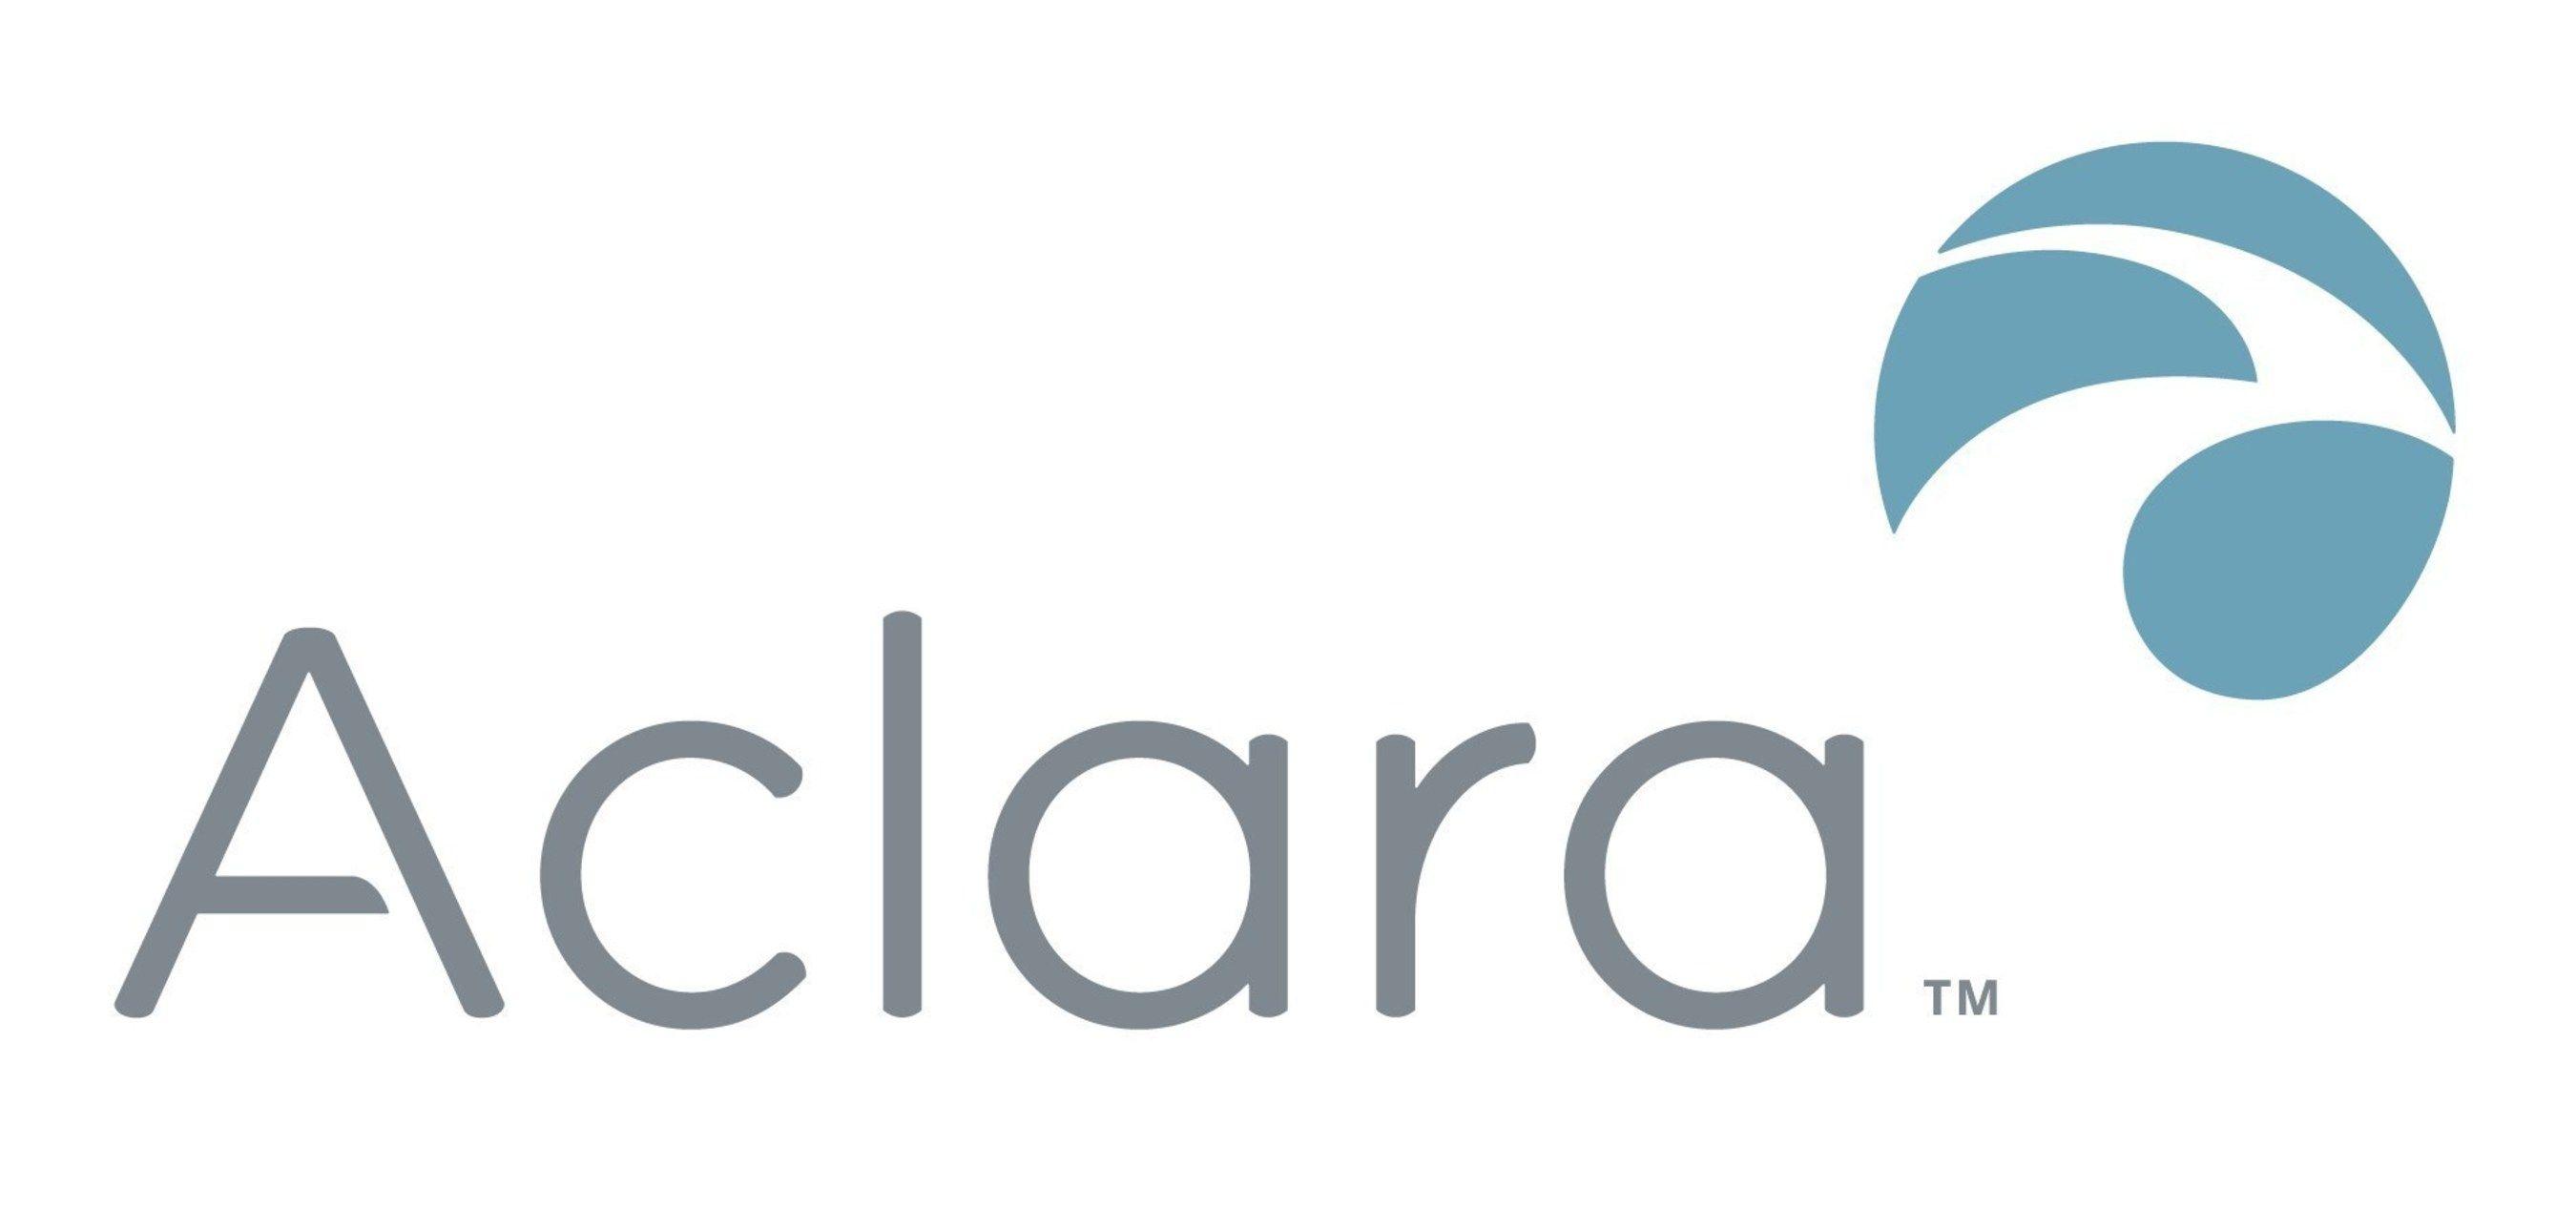 Aclara Logo - Aclara's New Through The Lid Antenna Couples Flexible Installation